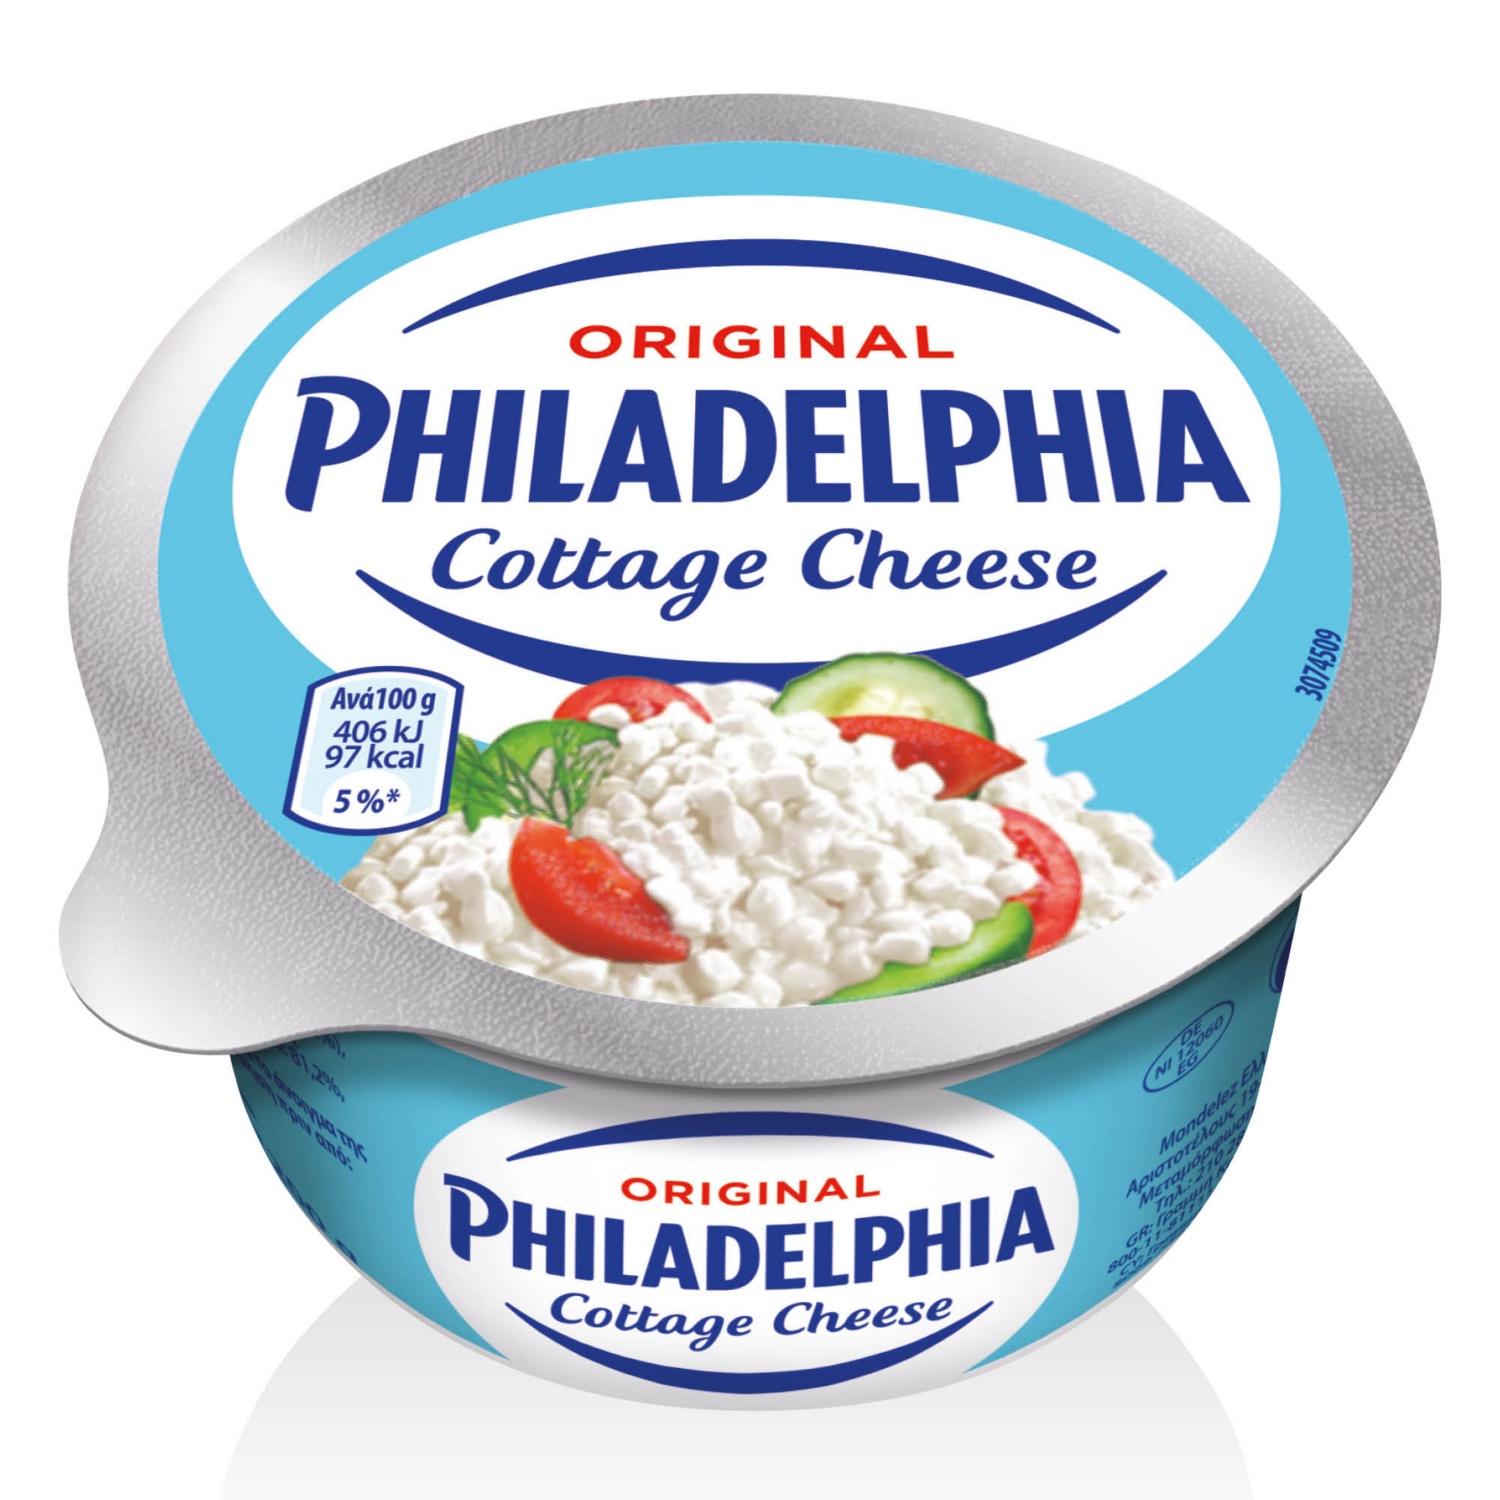 PHILADELPHIA Cottage Cheese, 200 g